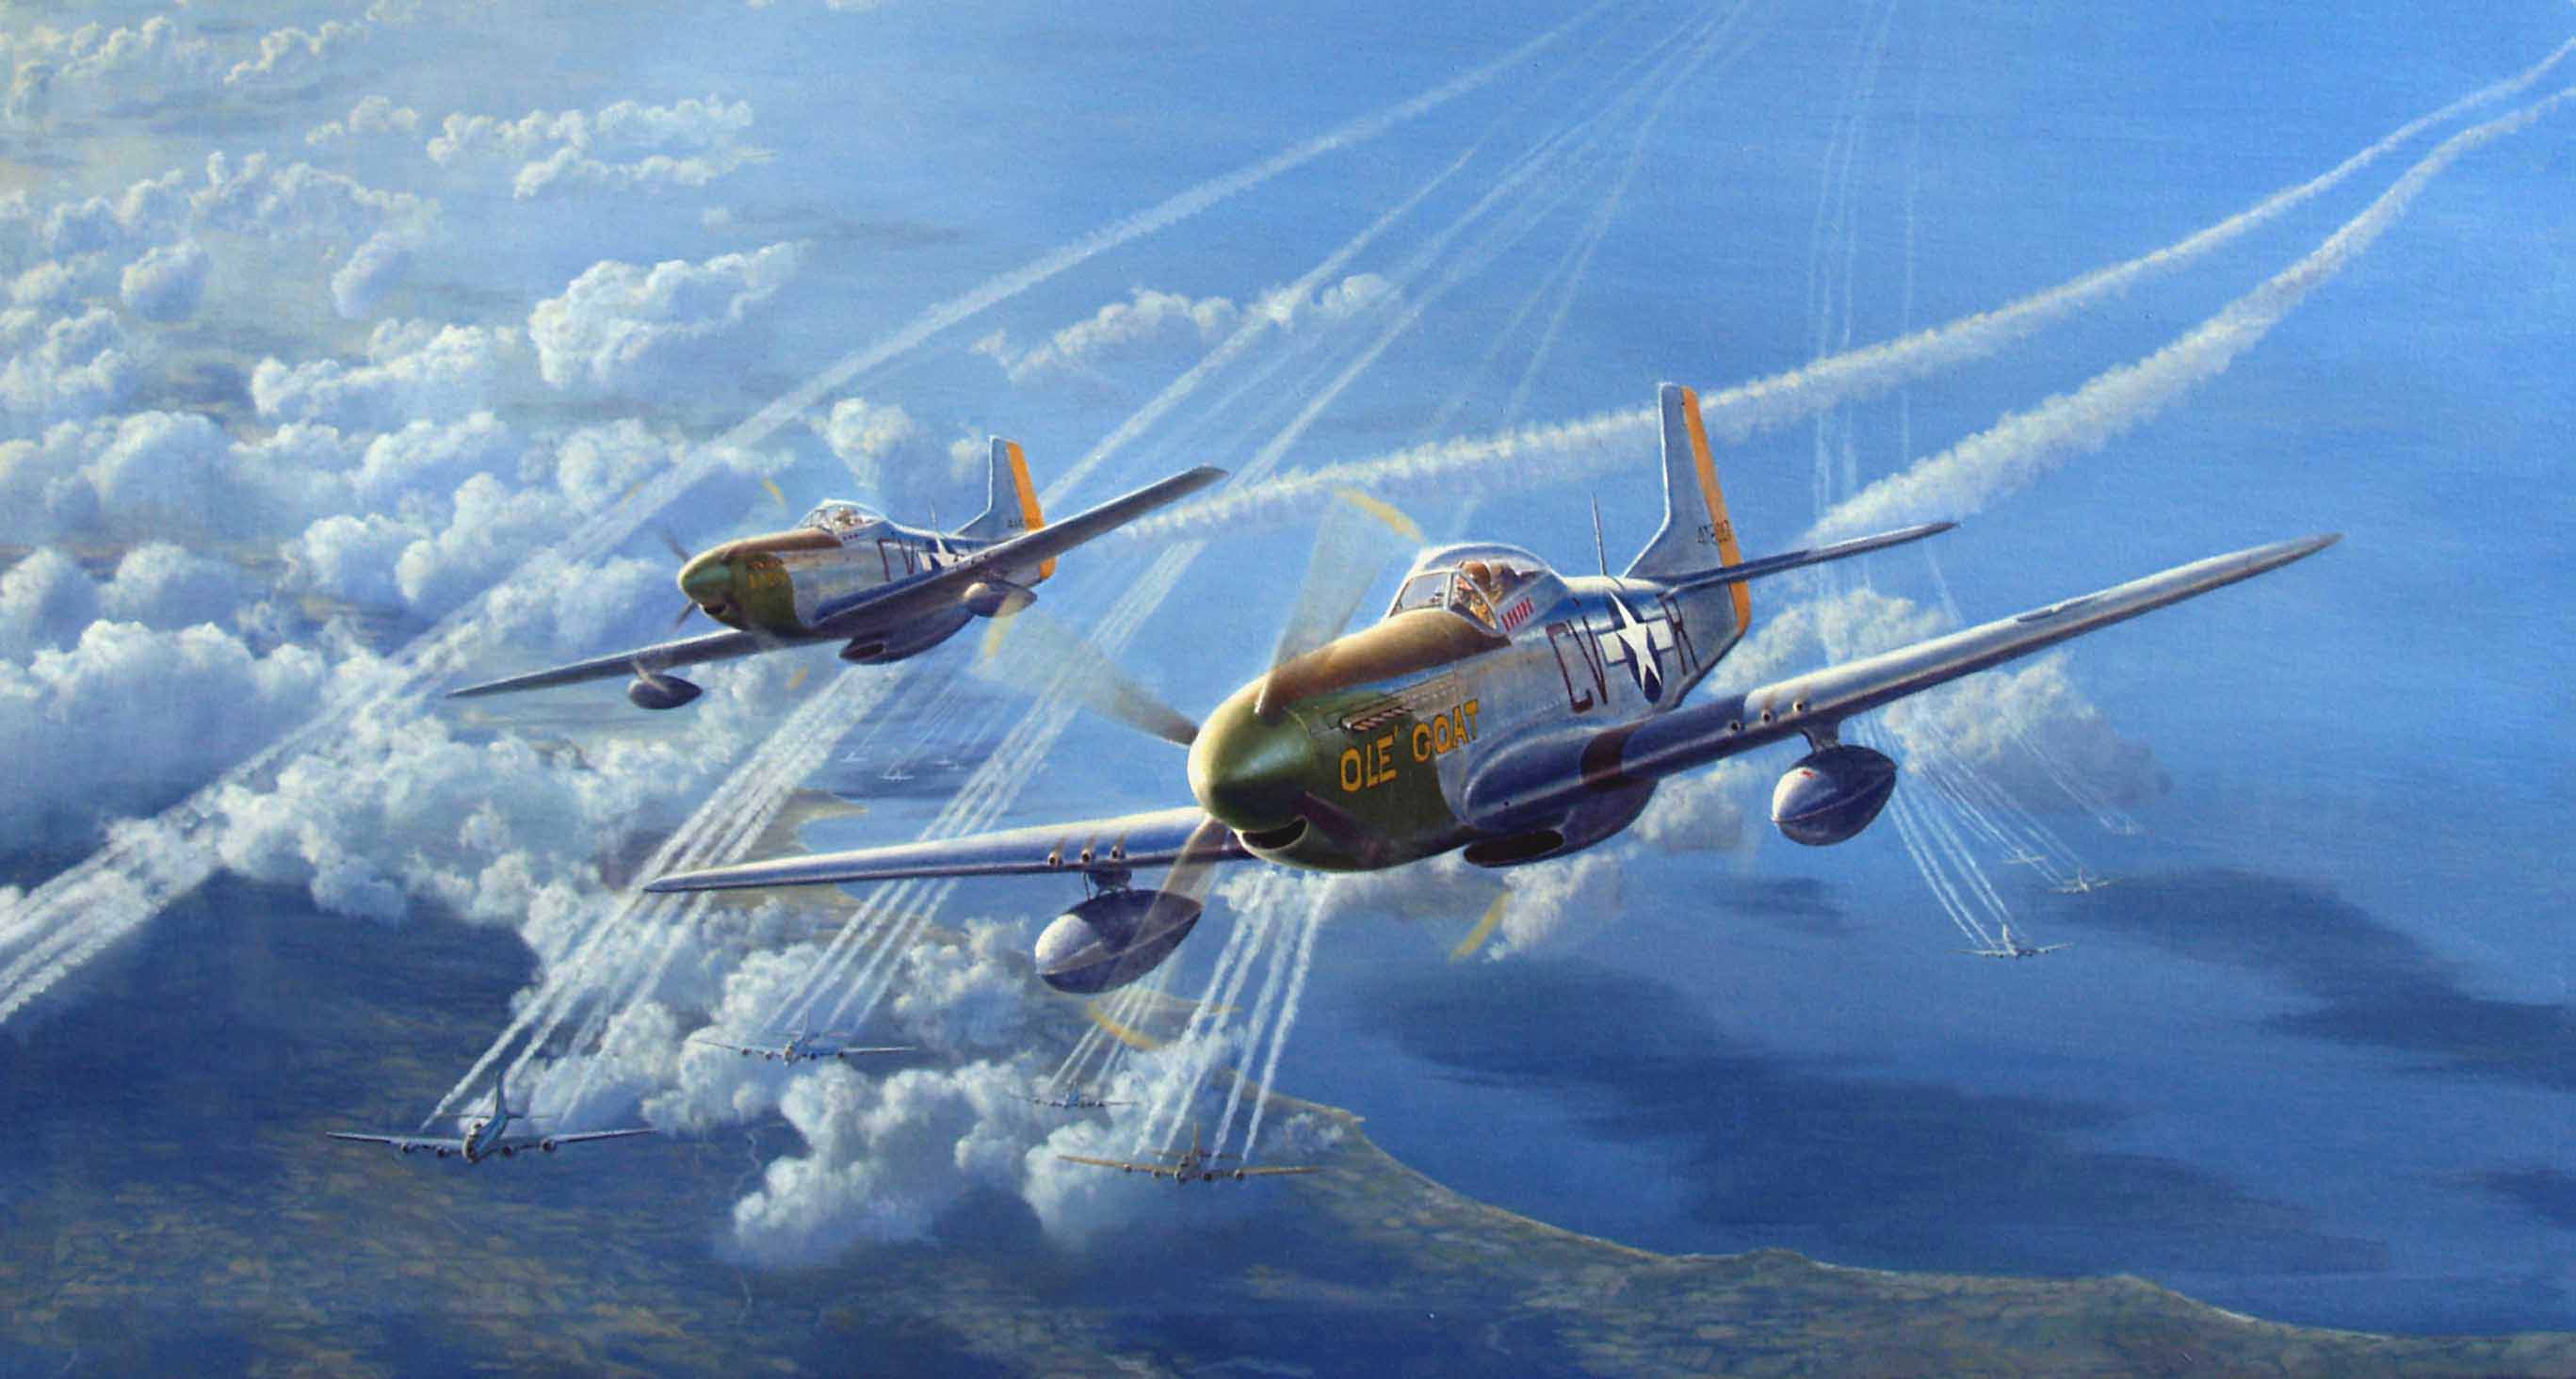 Wallpaper ID 112918  North American P51 Mustang World War II aircraft  free download